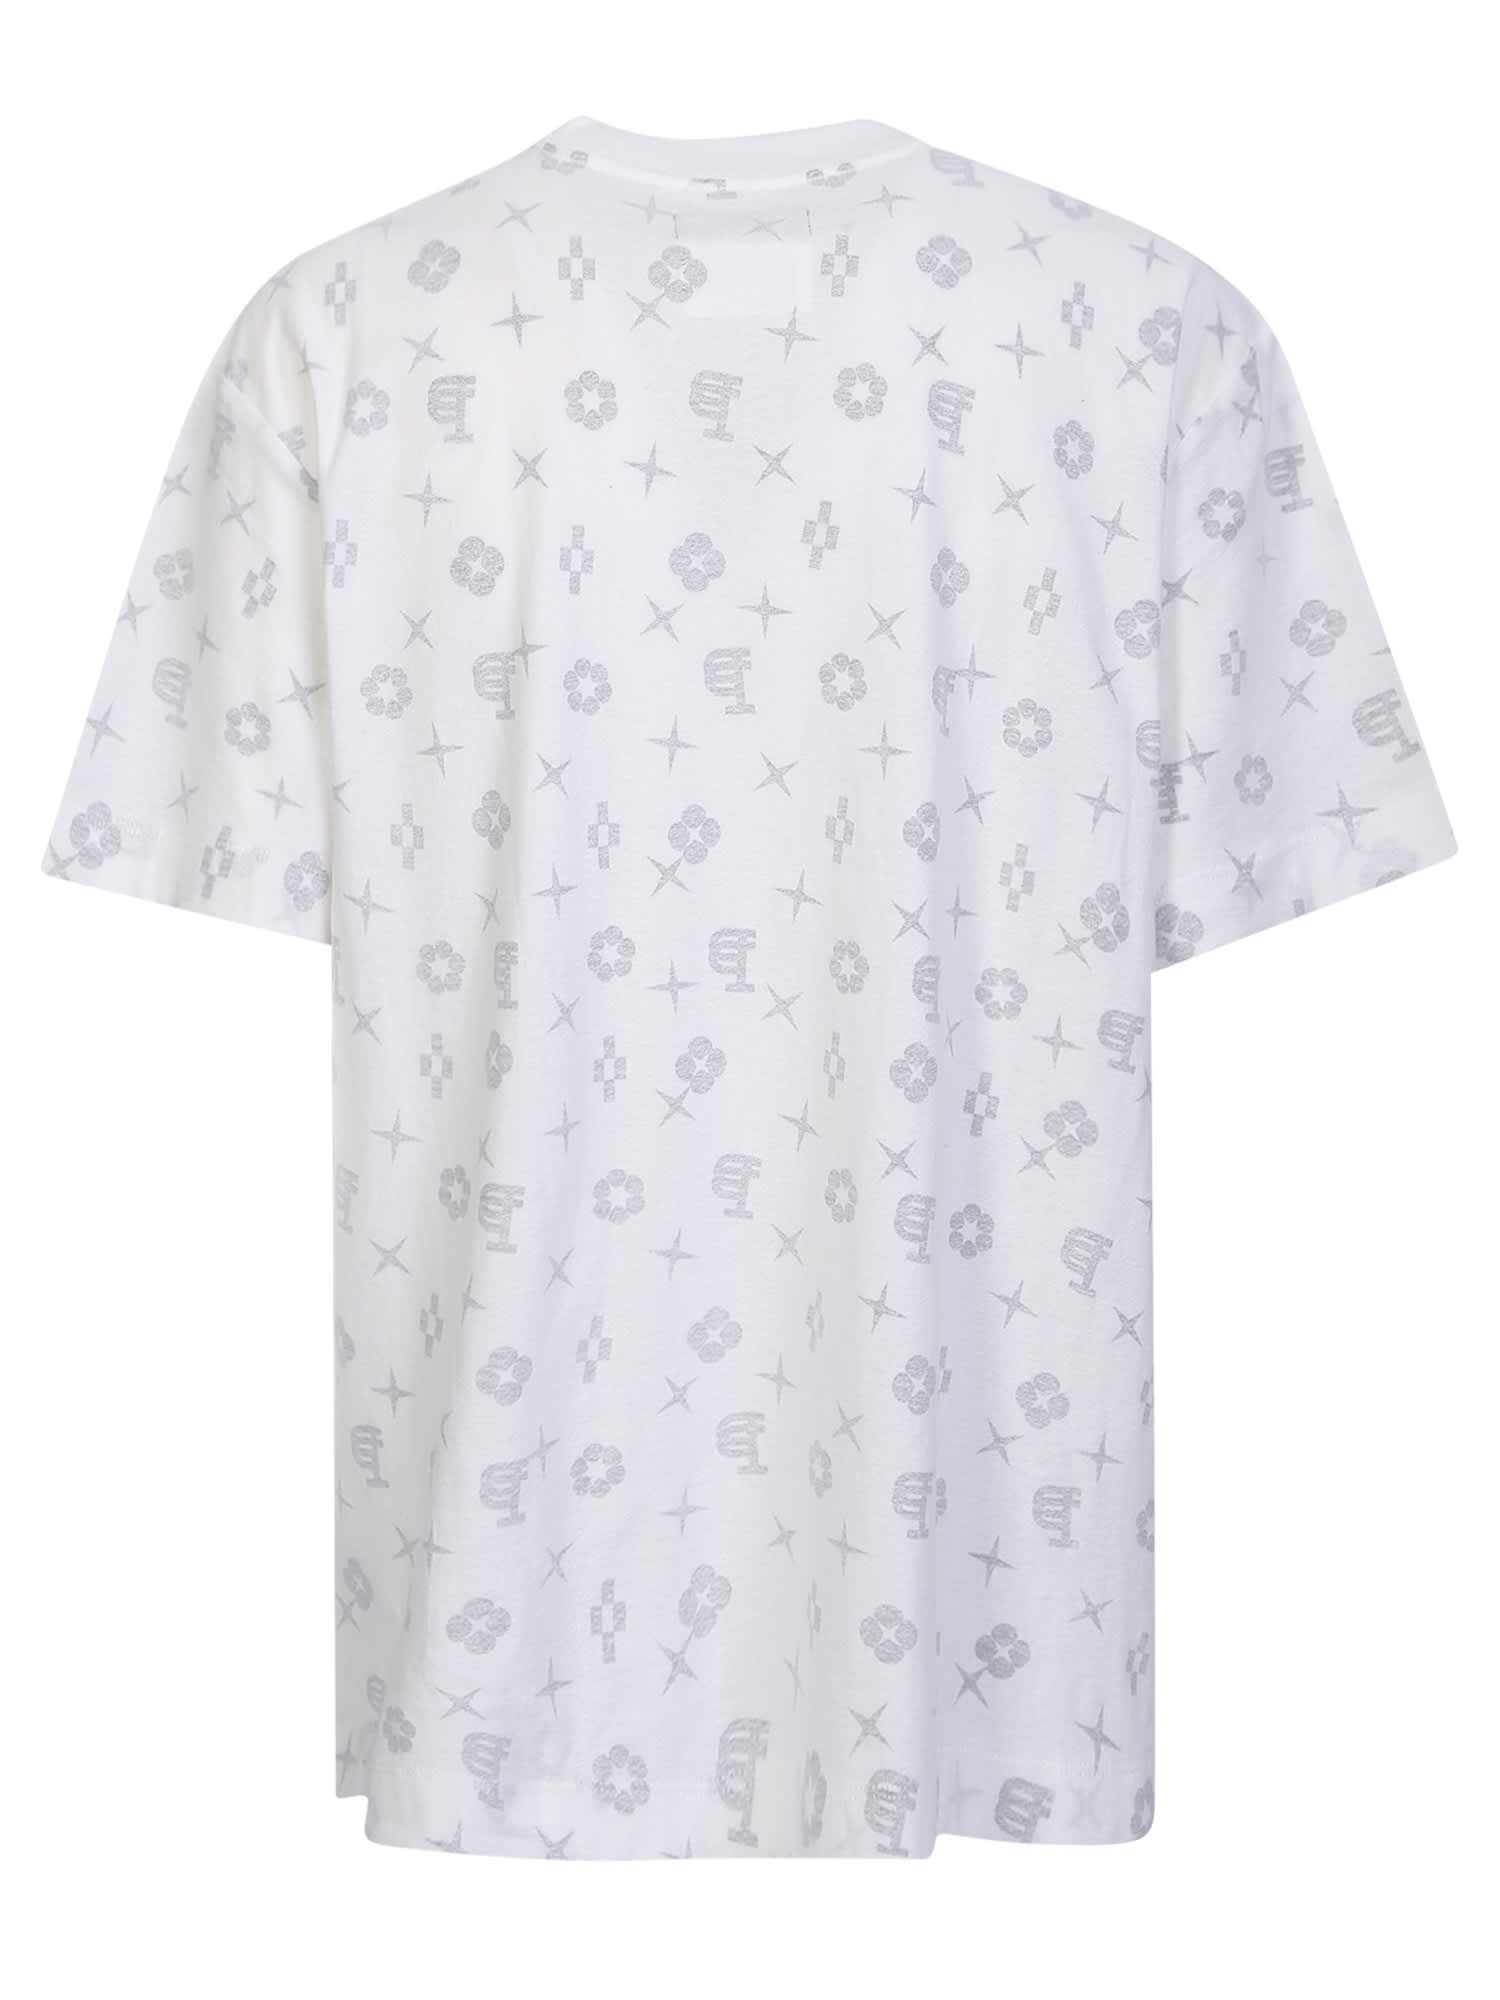 Louis Vuitton LV Escale Printed T-Shirt, White, L